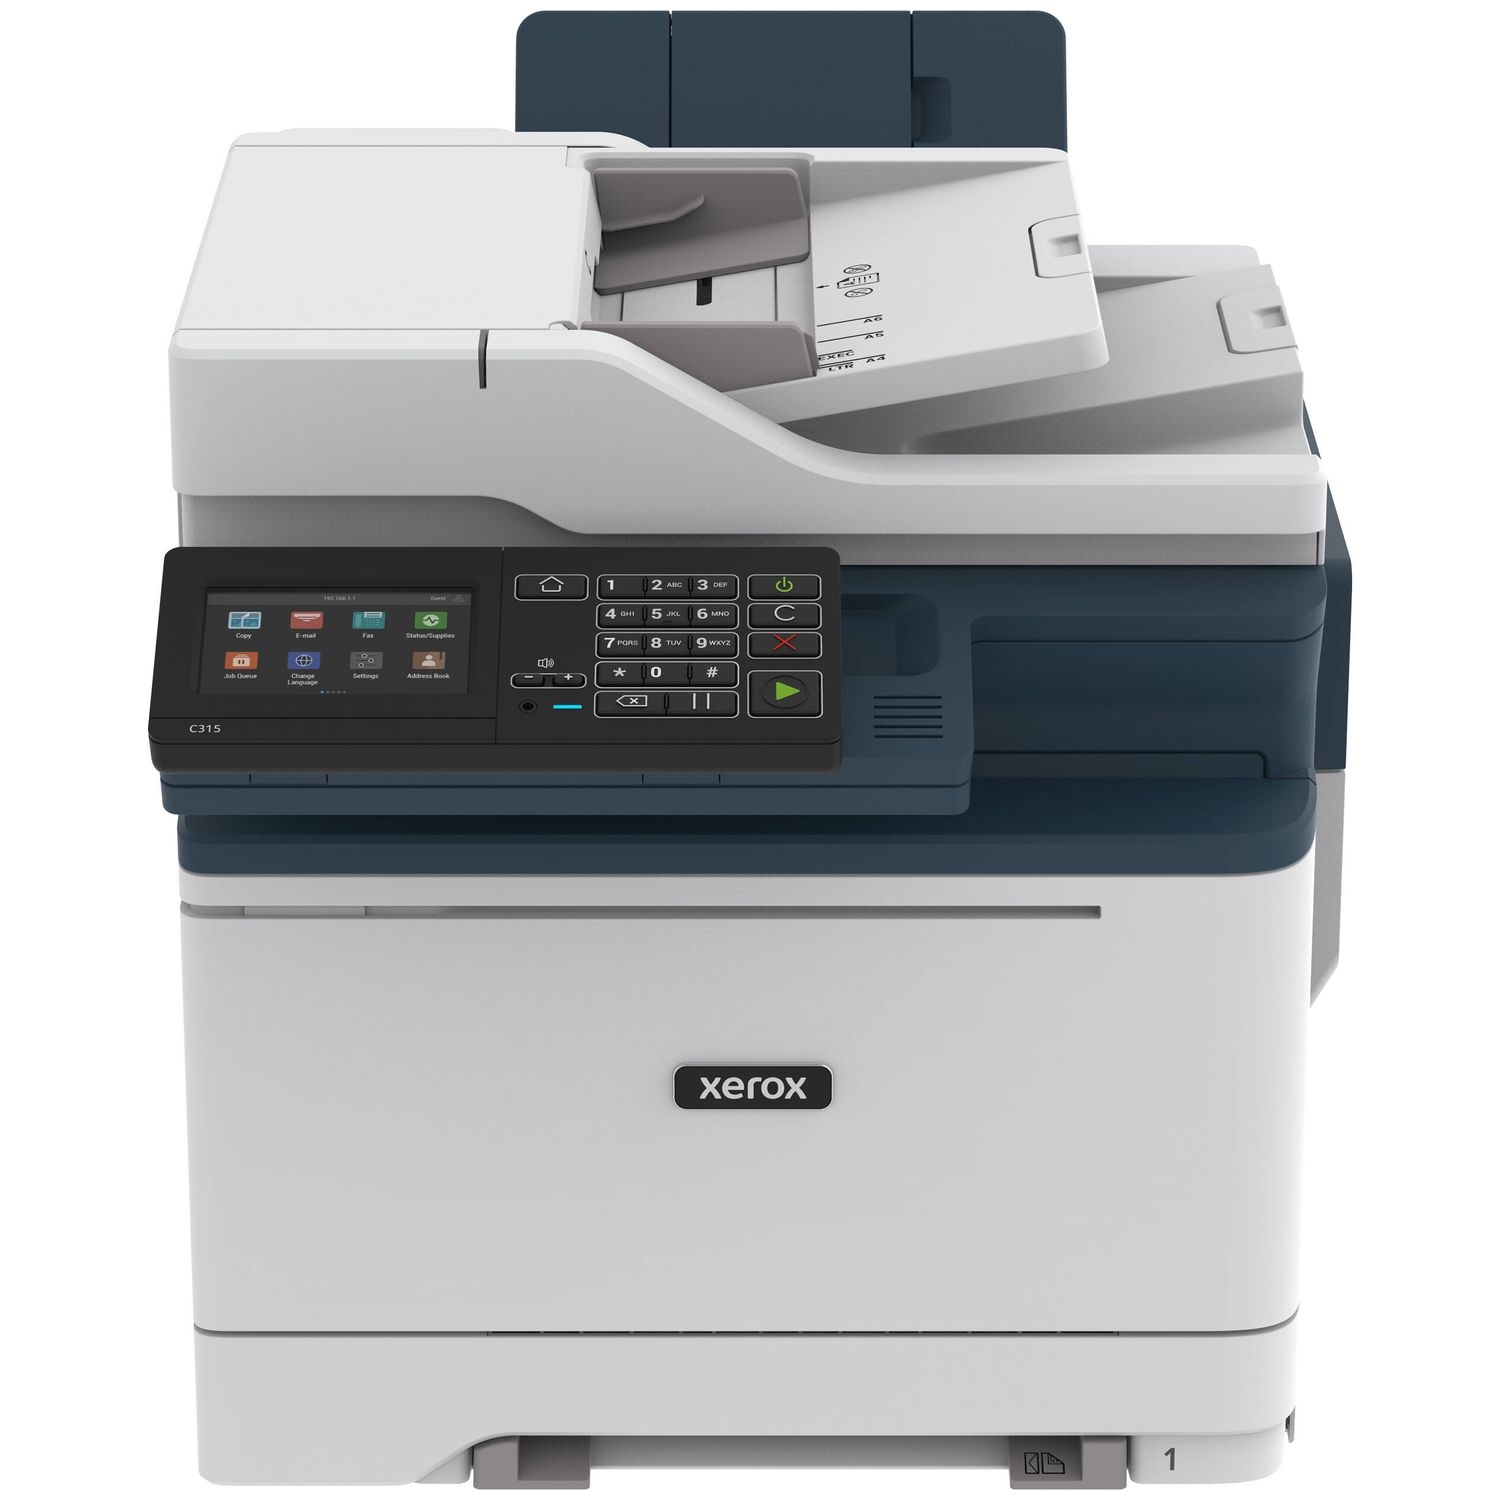 Xerox C315 Multifonction couleur image